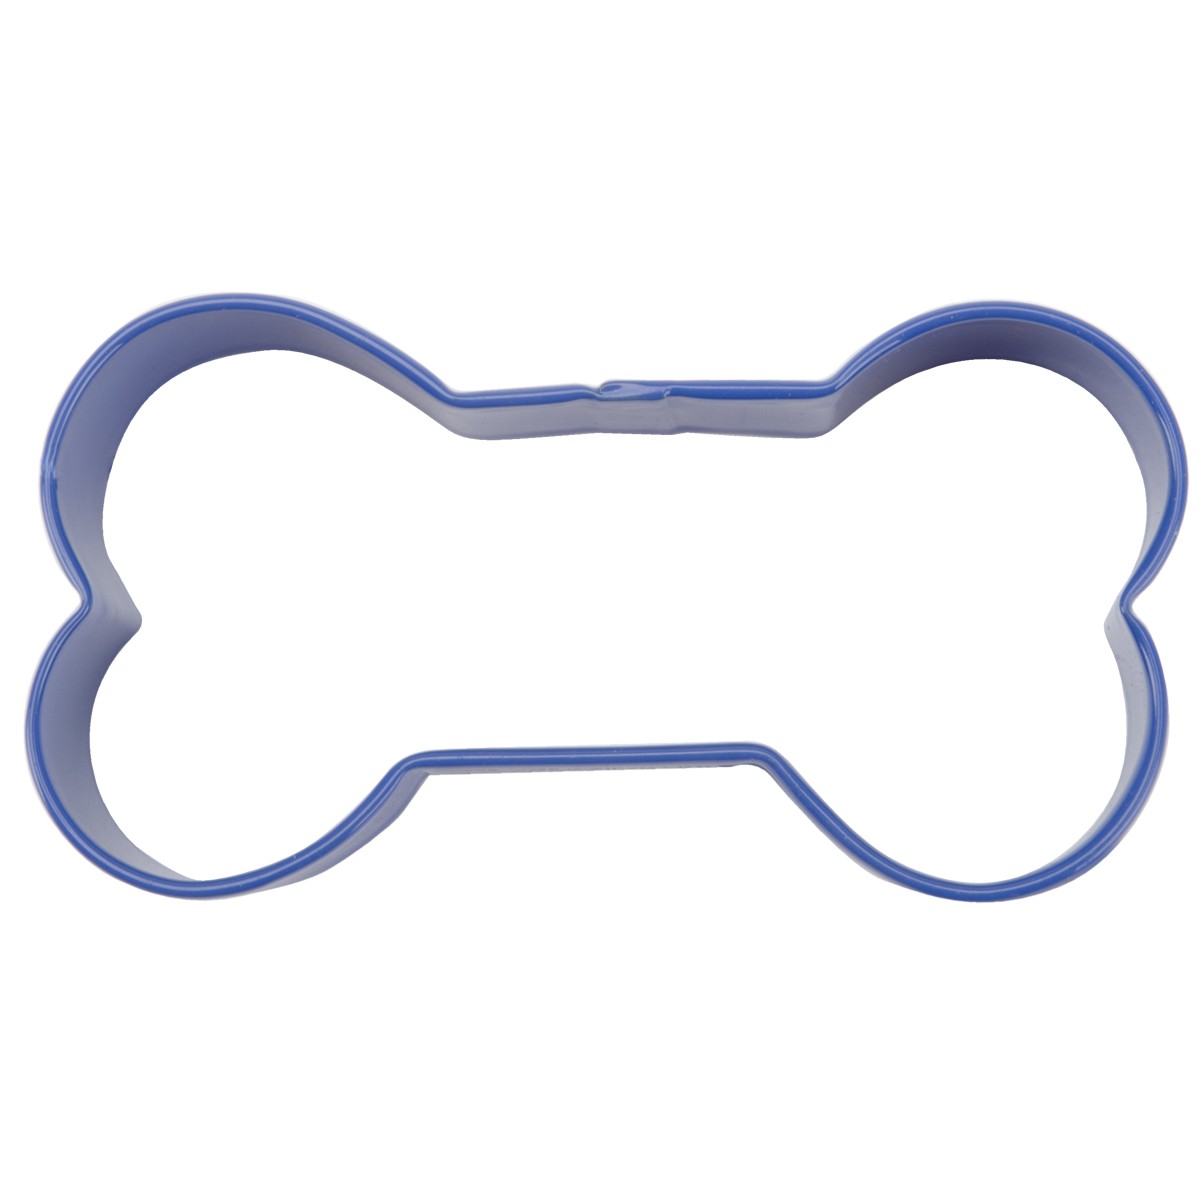 Dog bone chew clip art images free clipart image 8